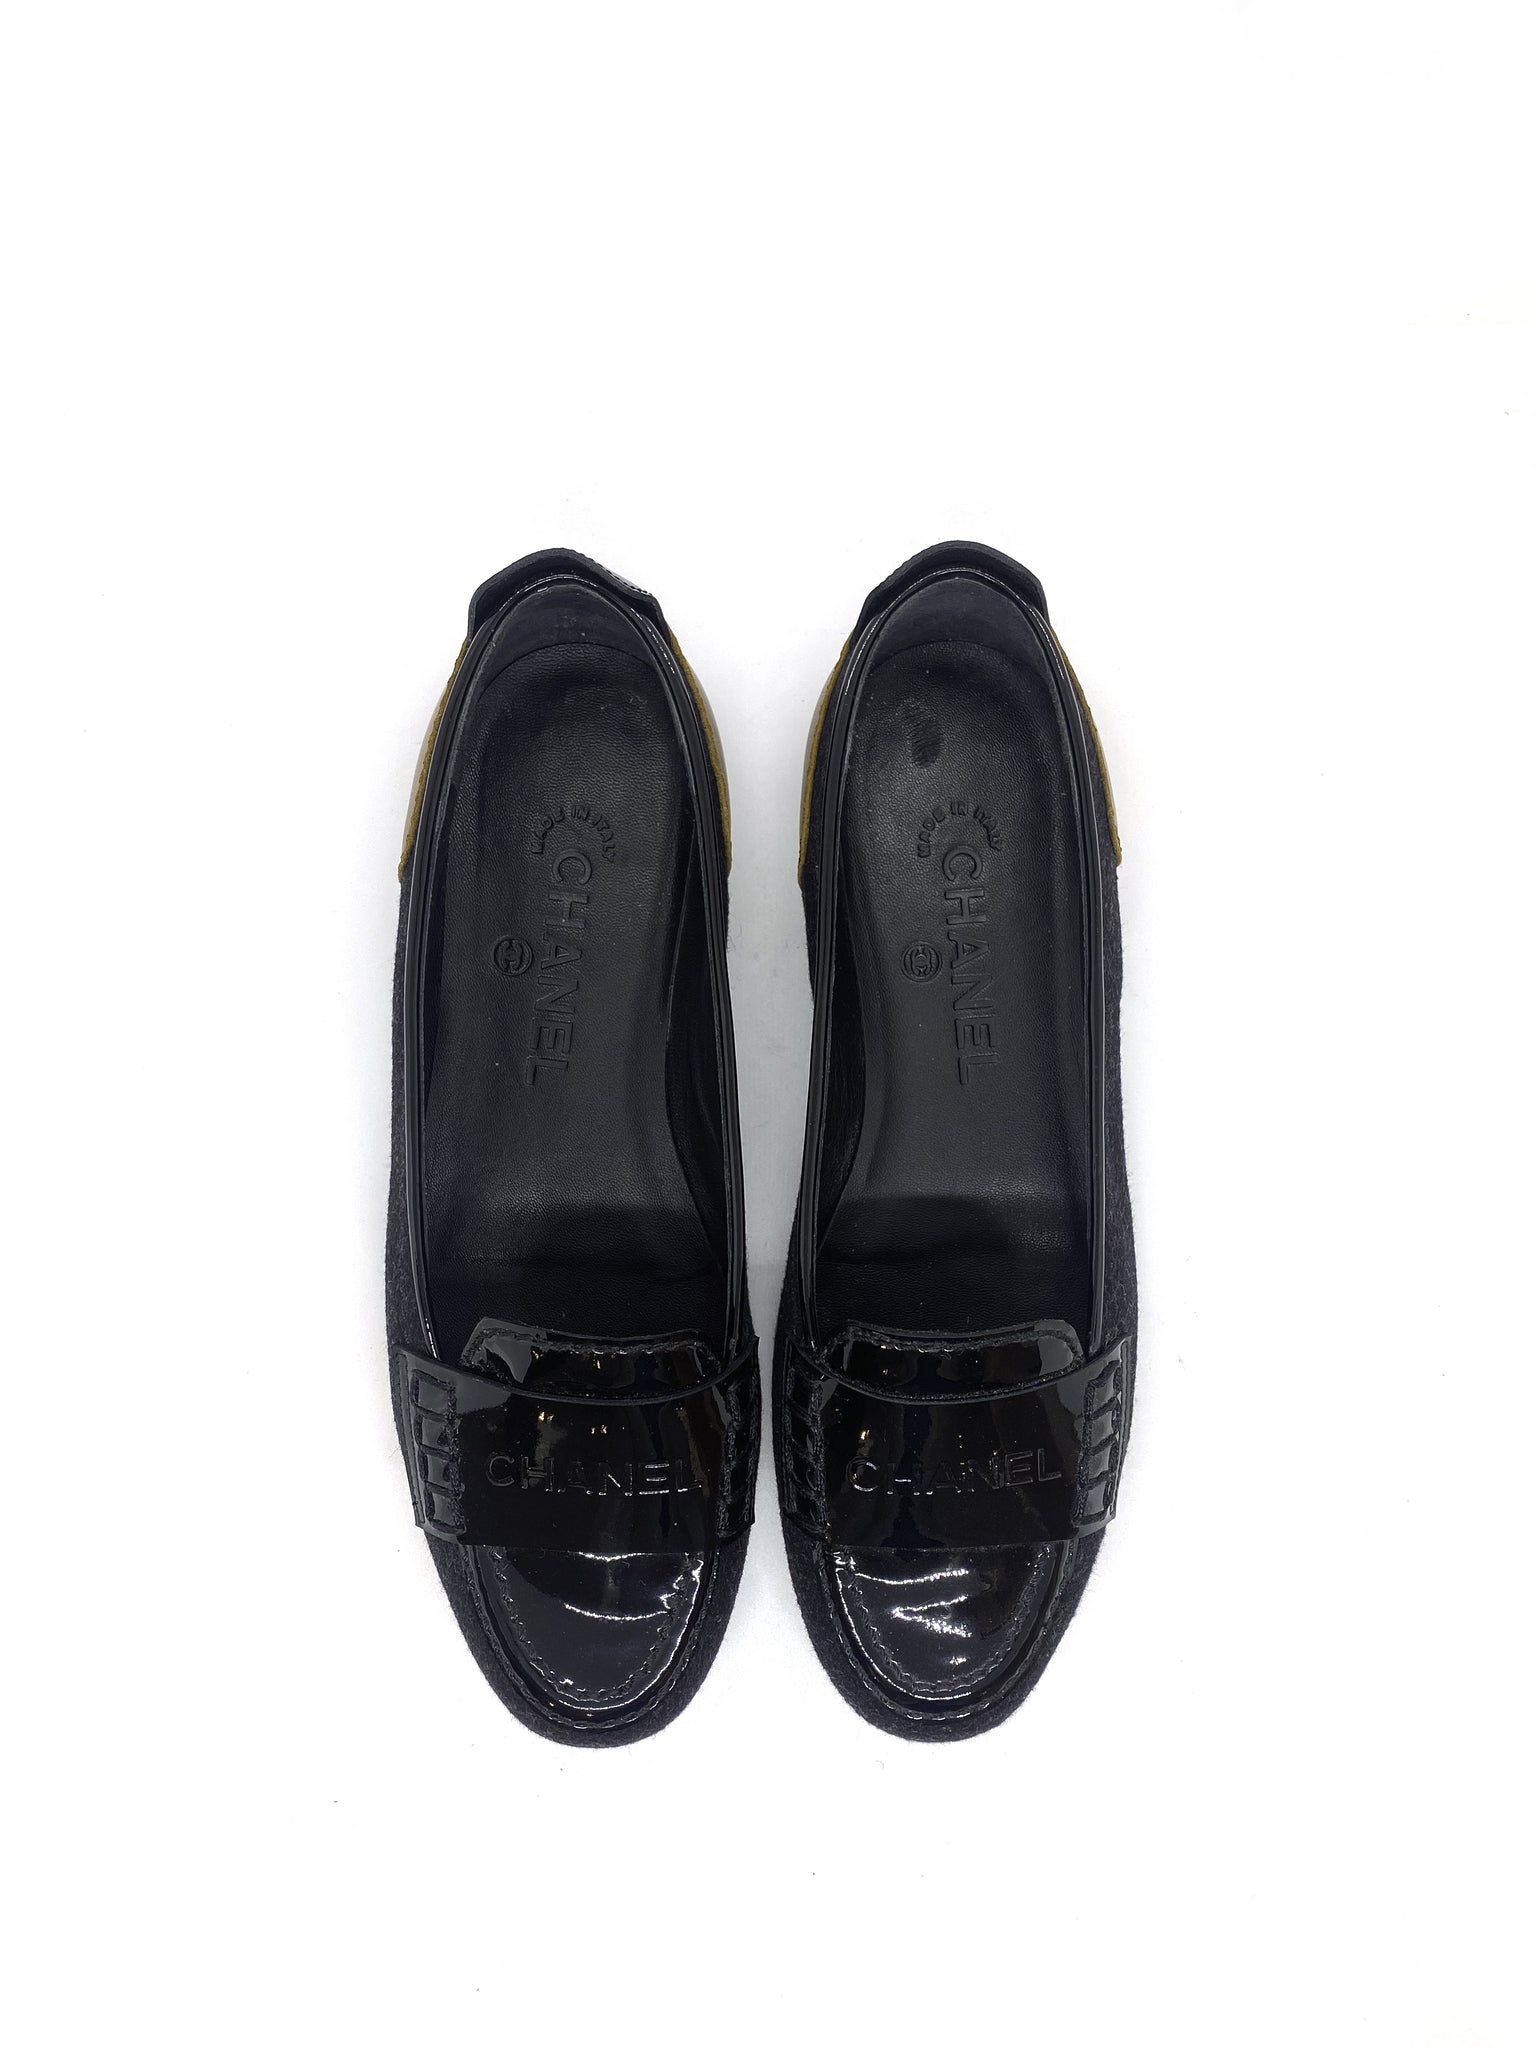 Chanel Black Size 38 Flat Women's Shoes